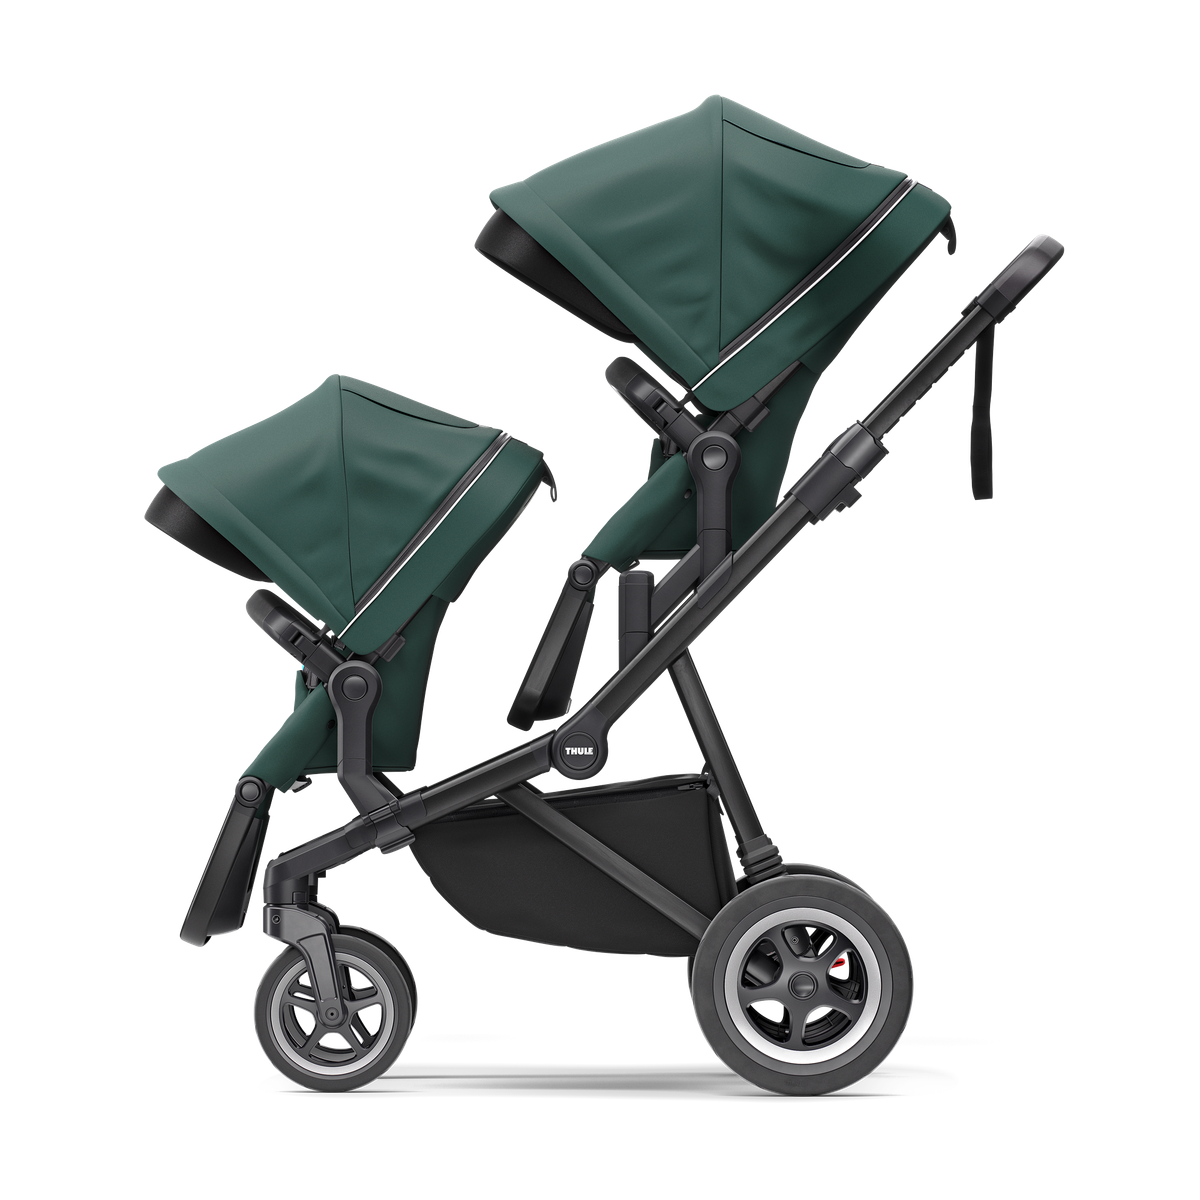 Thule Sleek city stroller mallard green on black with bassinet mallard green